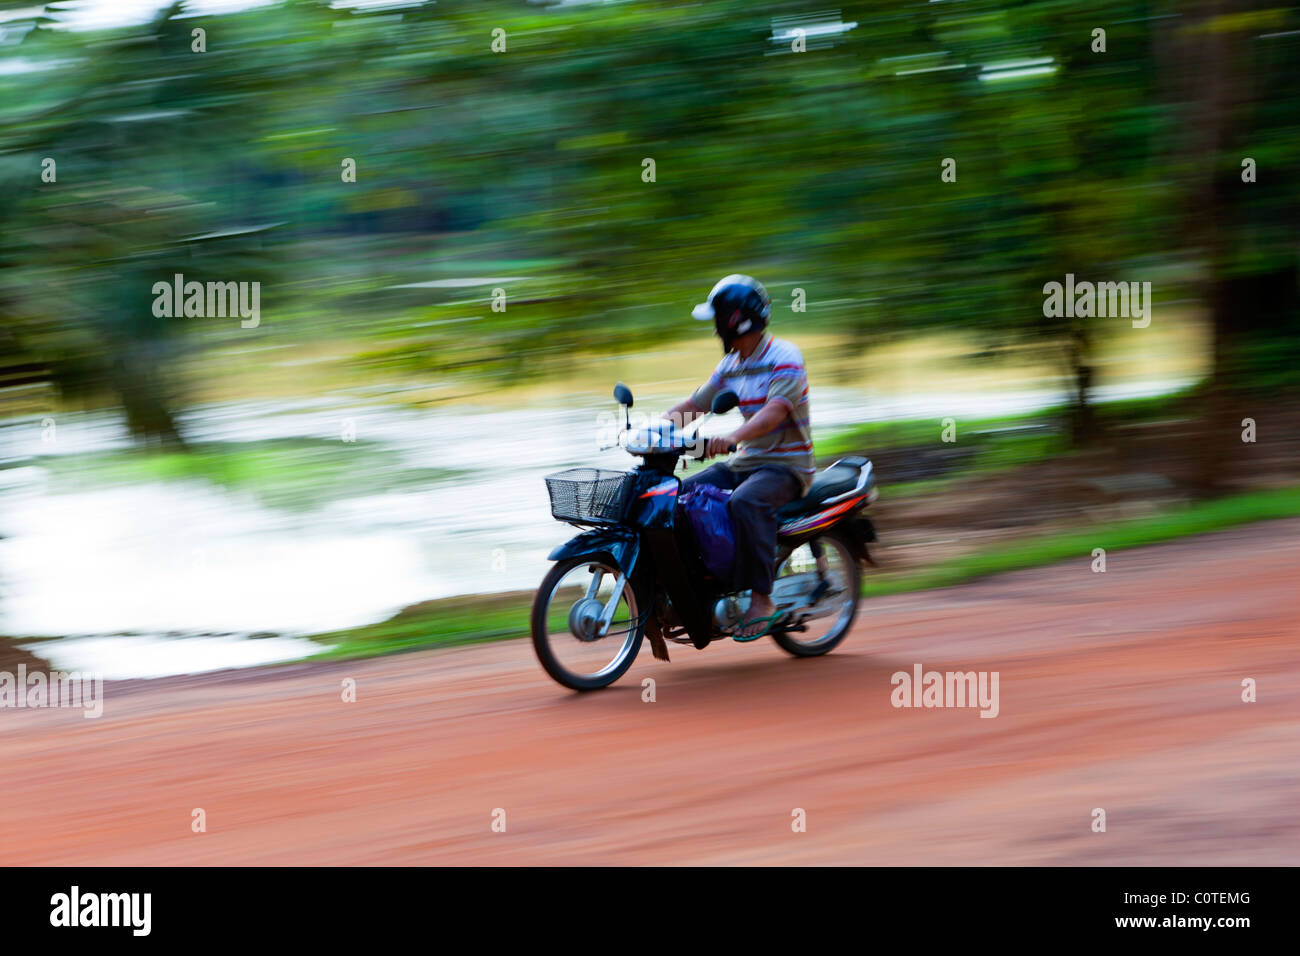 Hombre en una moto cerca de Seam Reap, Camboya, Indochina, Asia Foto de stock